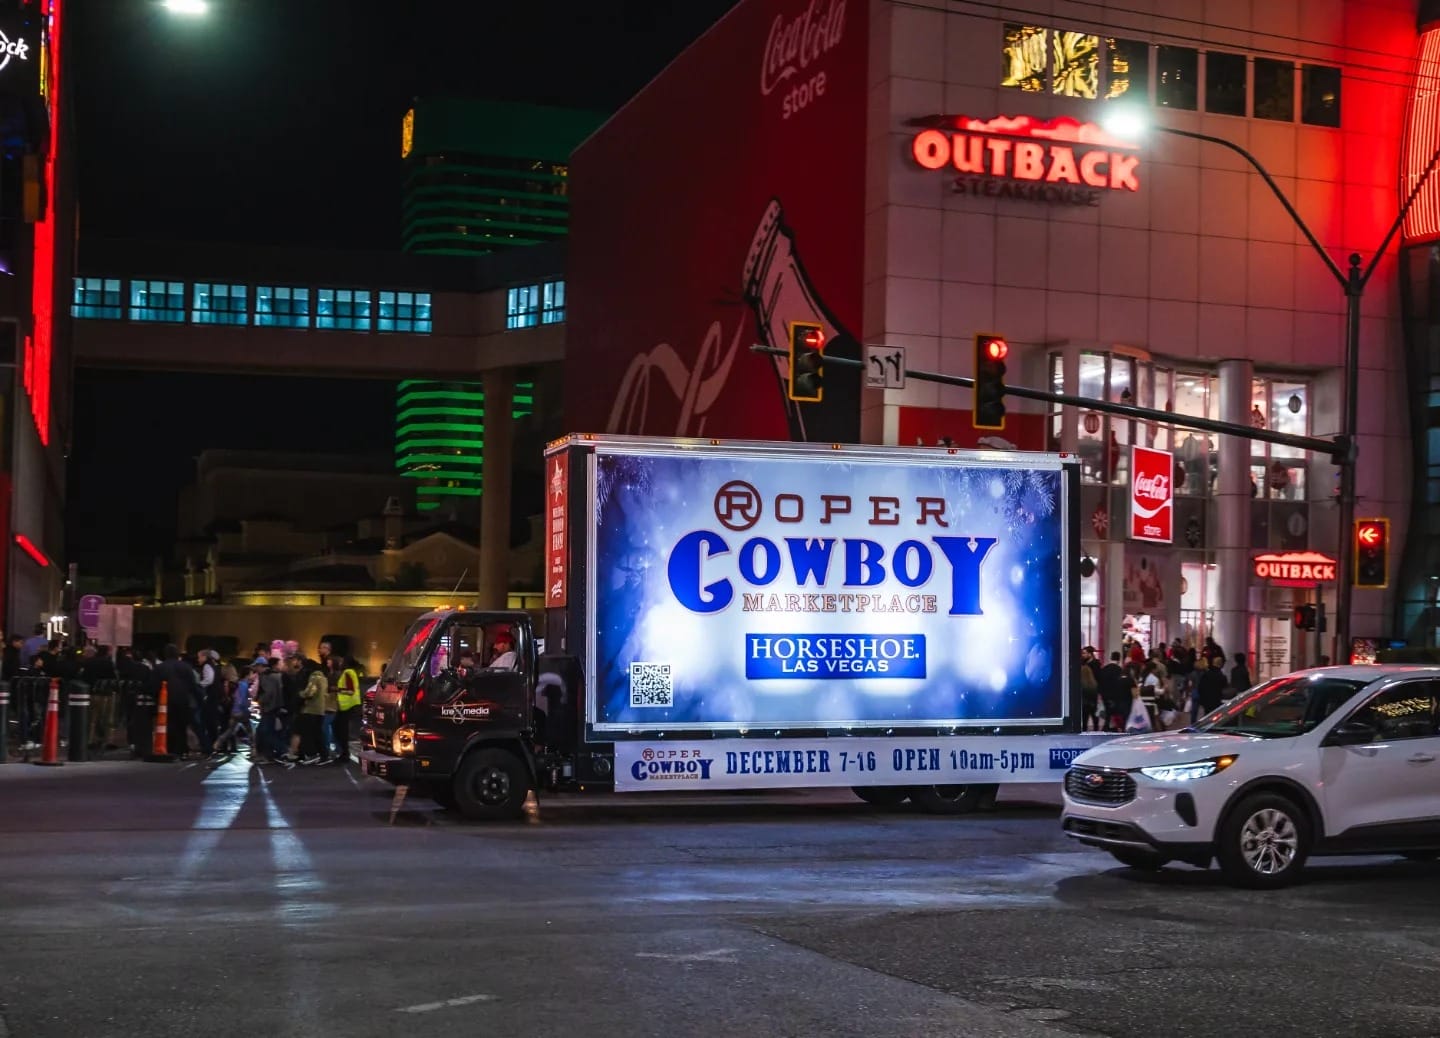 Roper Cowboy Marketplace: A Highlight of NFR 2023 at Horseshoe Las Vegas